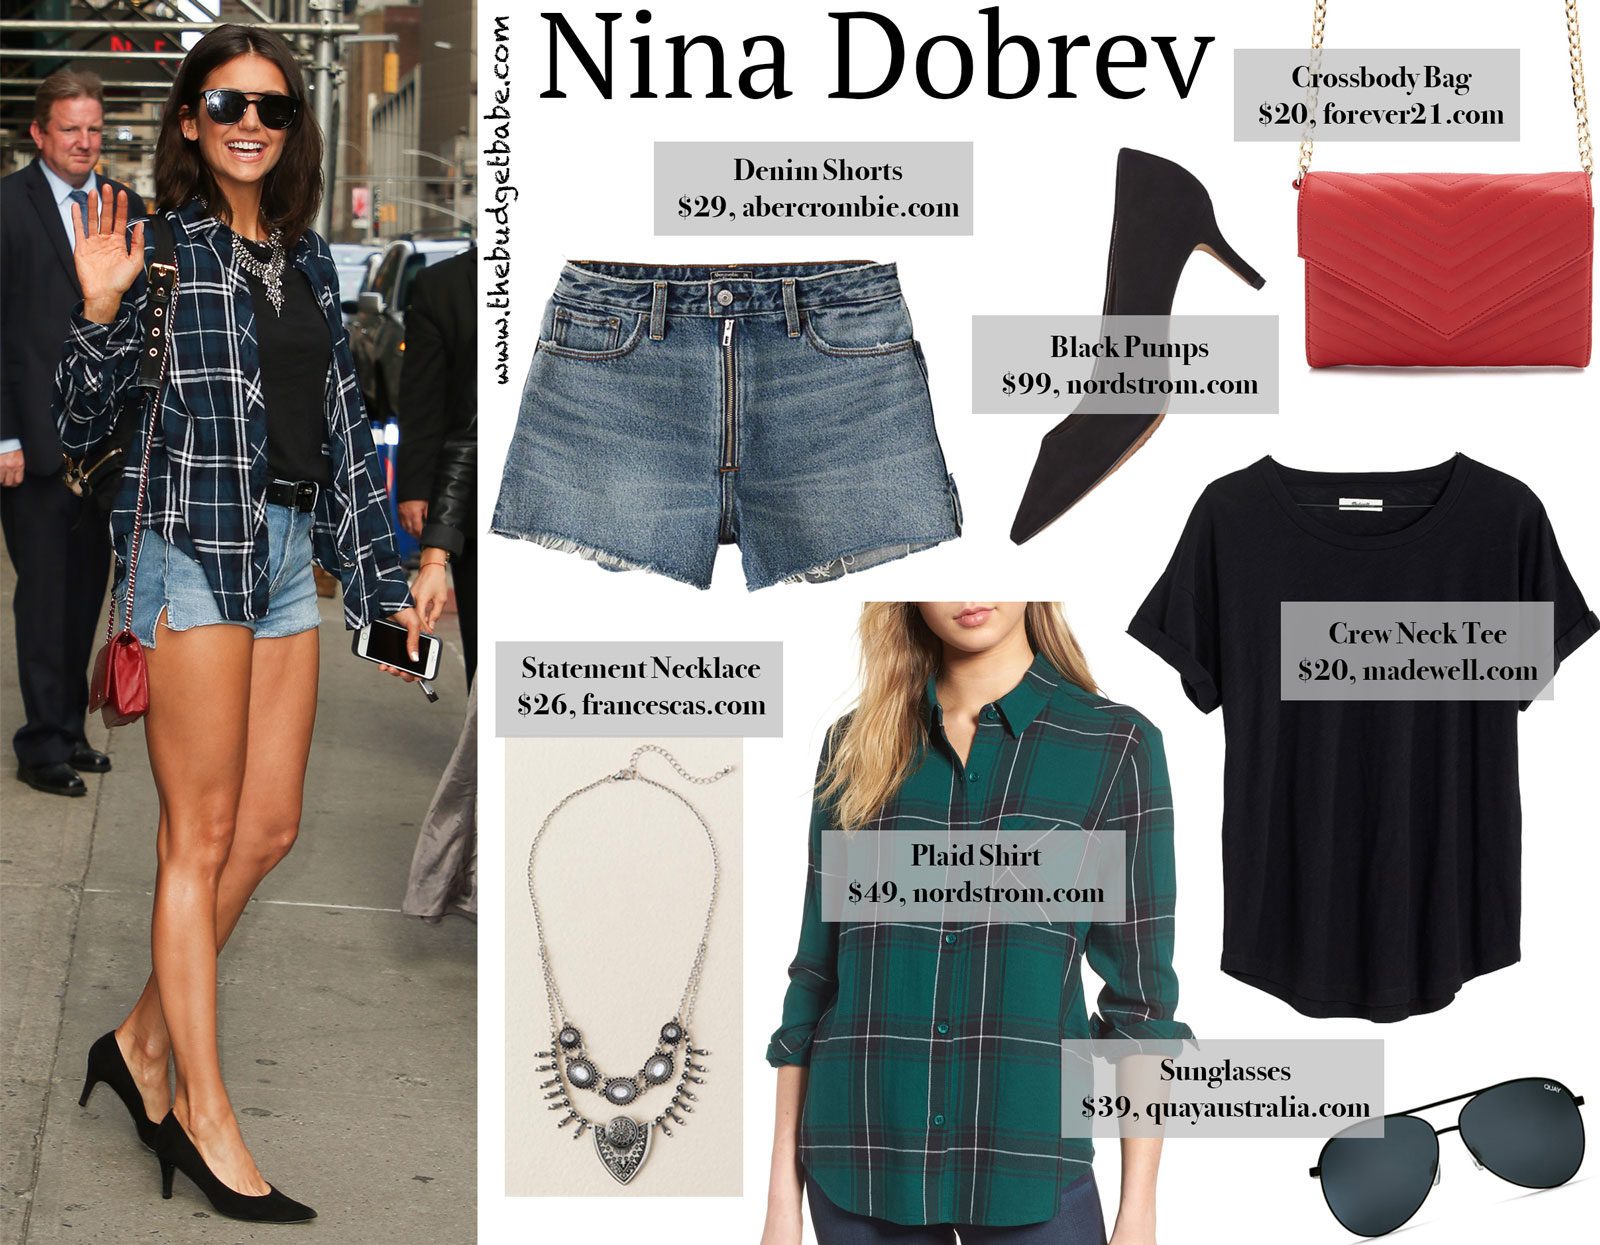 Nina Dobrev's Plaid Shirt Black Pump Look for Less